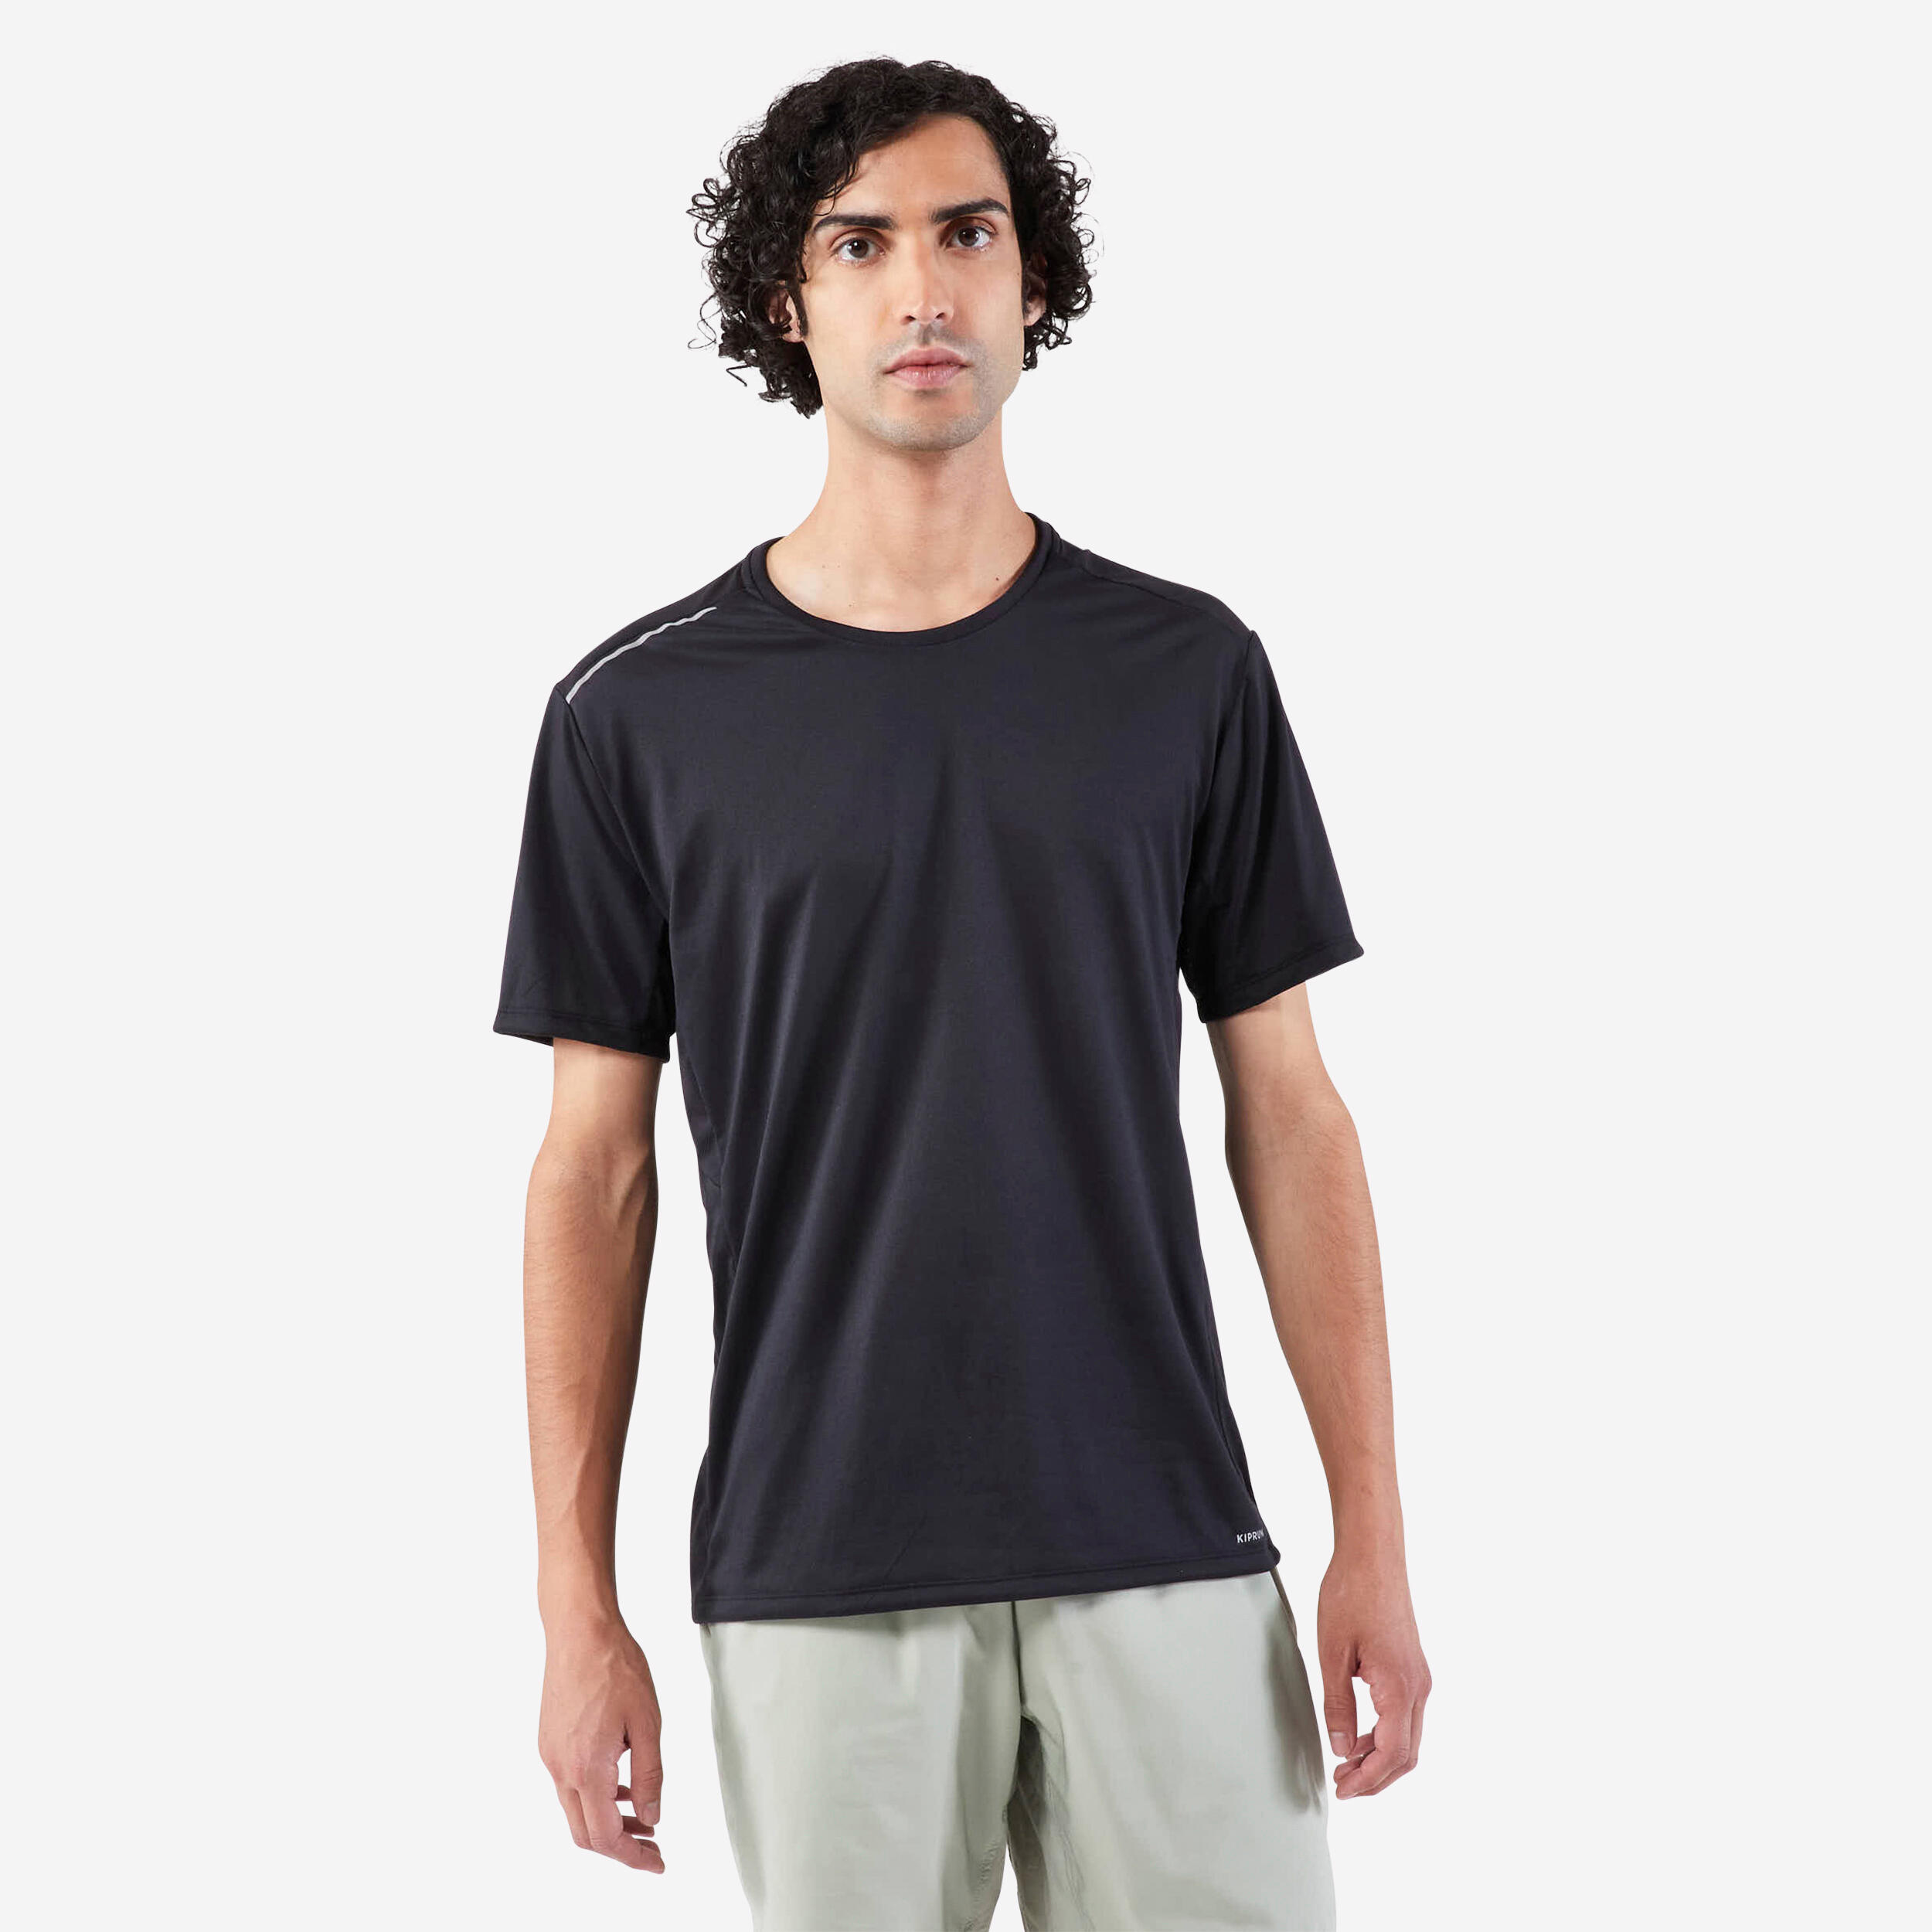 Men's Running T-Shirt - Dry Black - smoked black - Kalenji - Decathlon